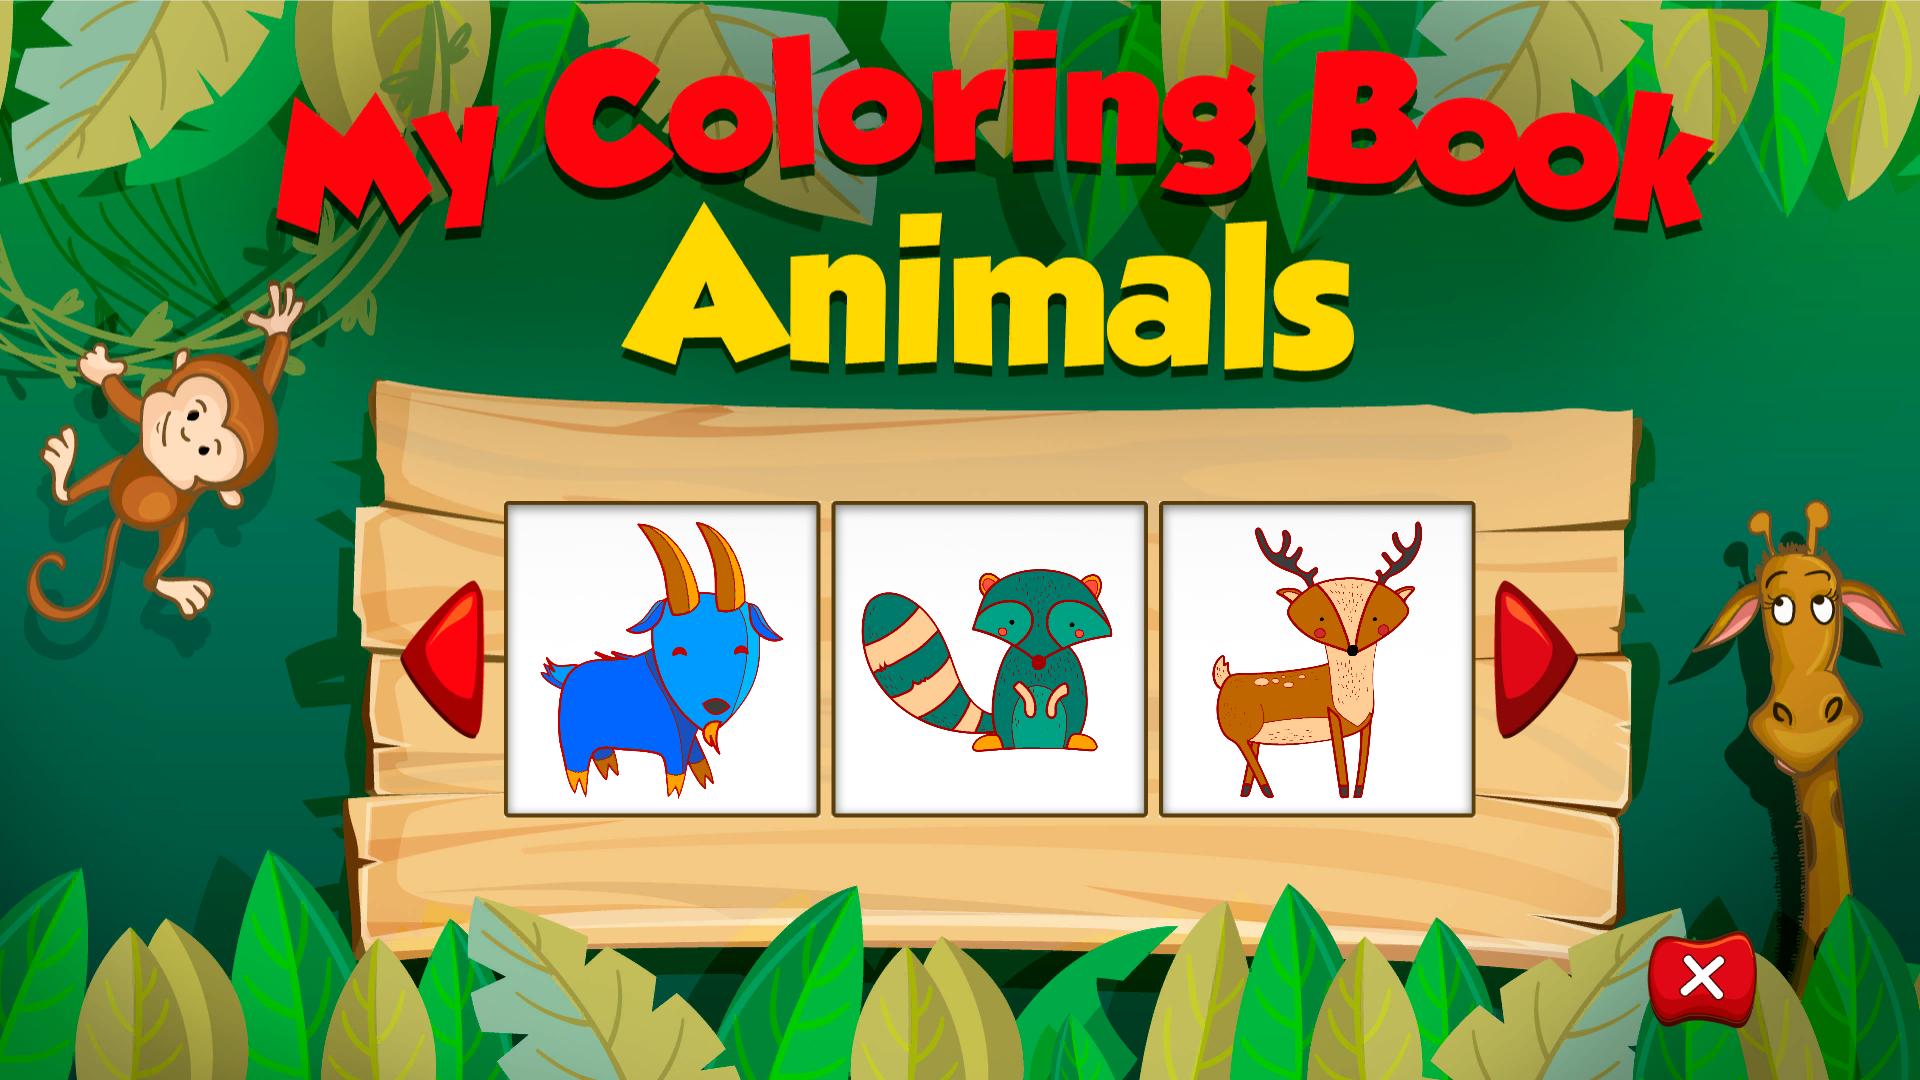 My Coloring Book: Animals screenshot